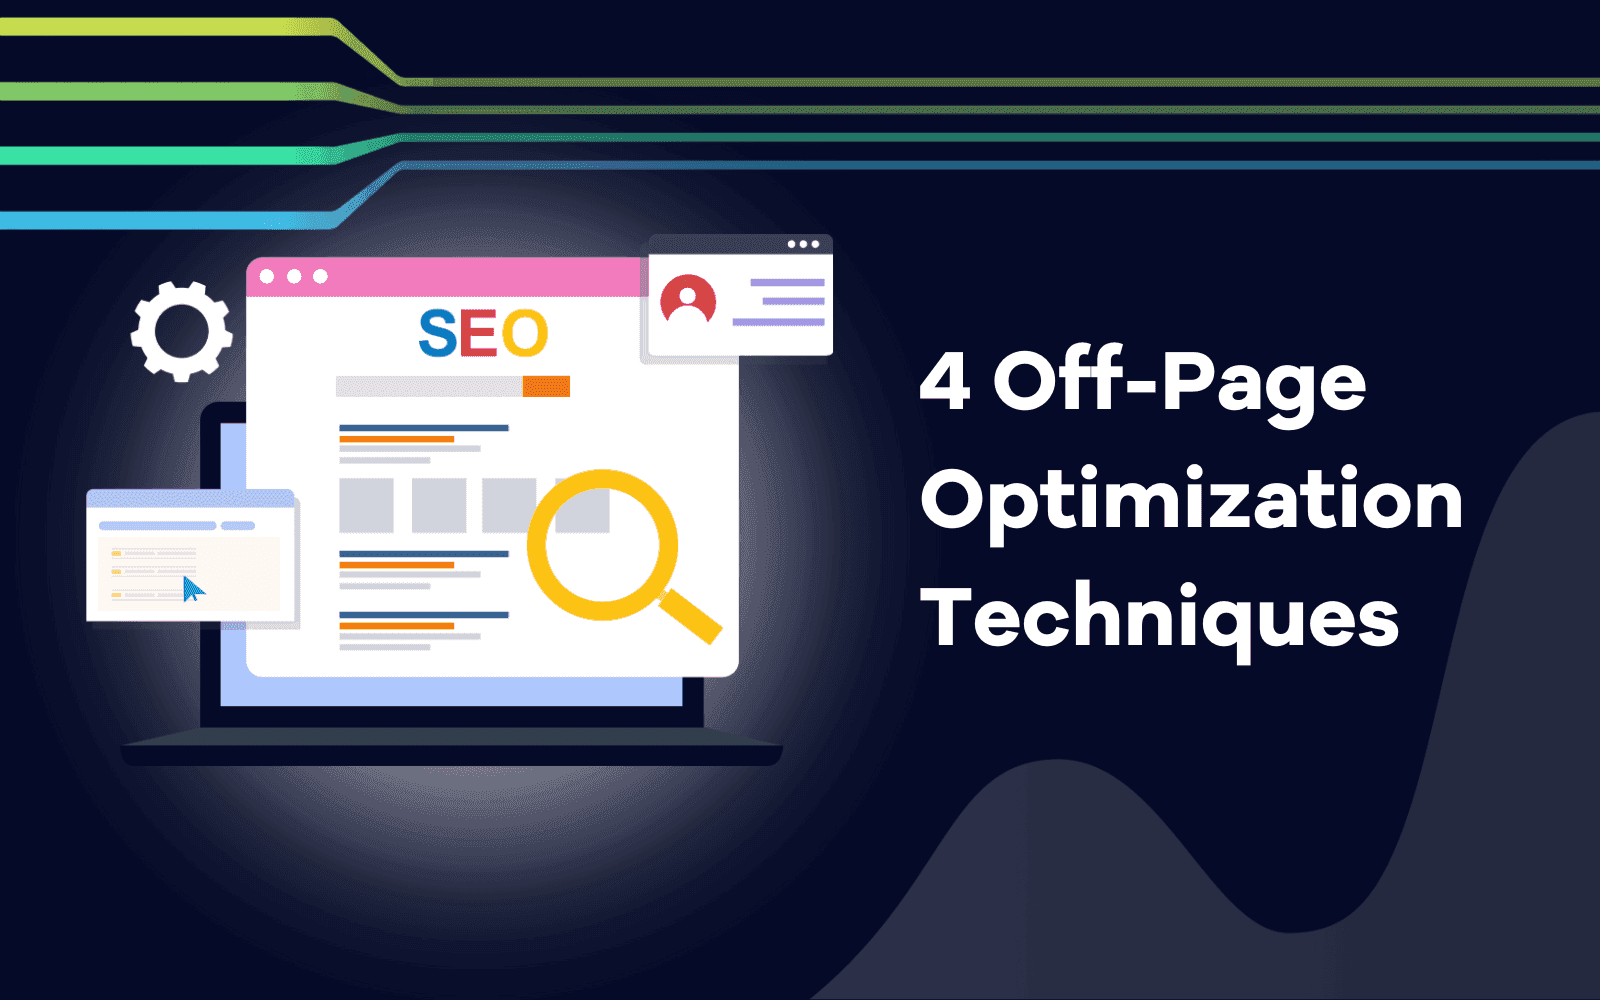 Off-Page Optimization Techniques